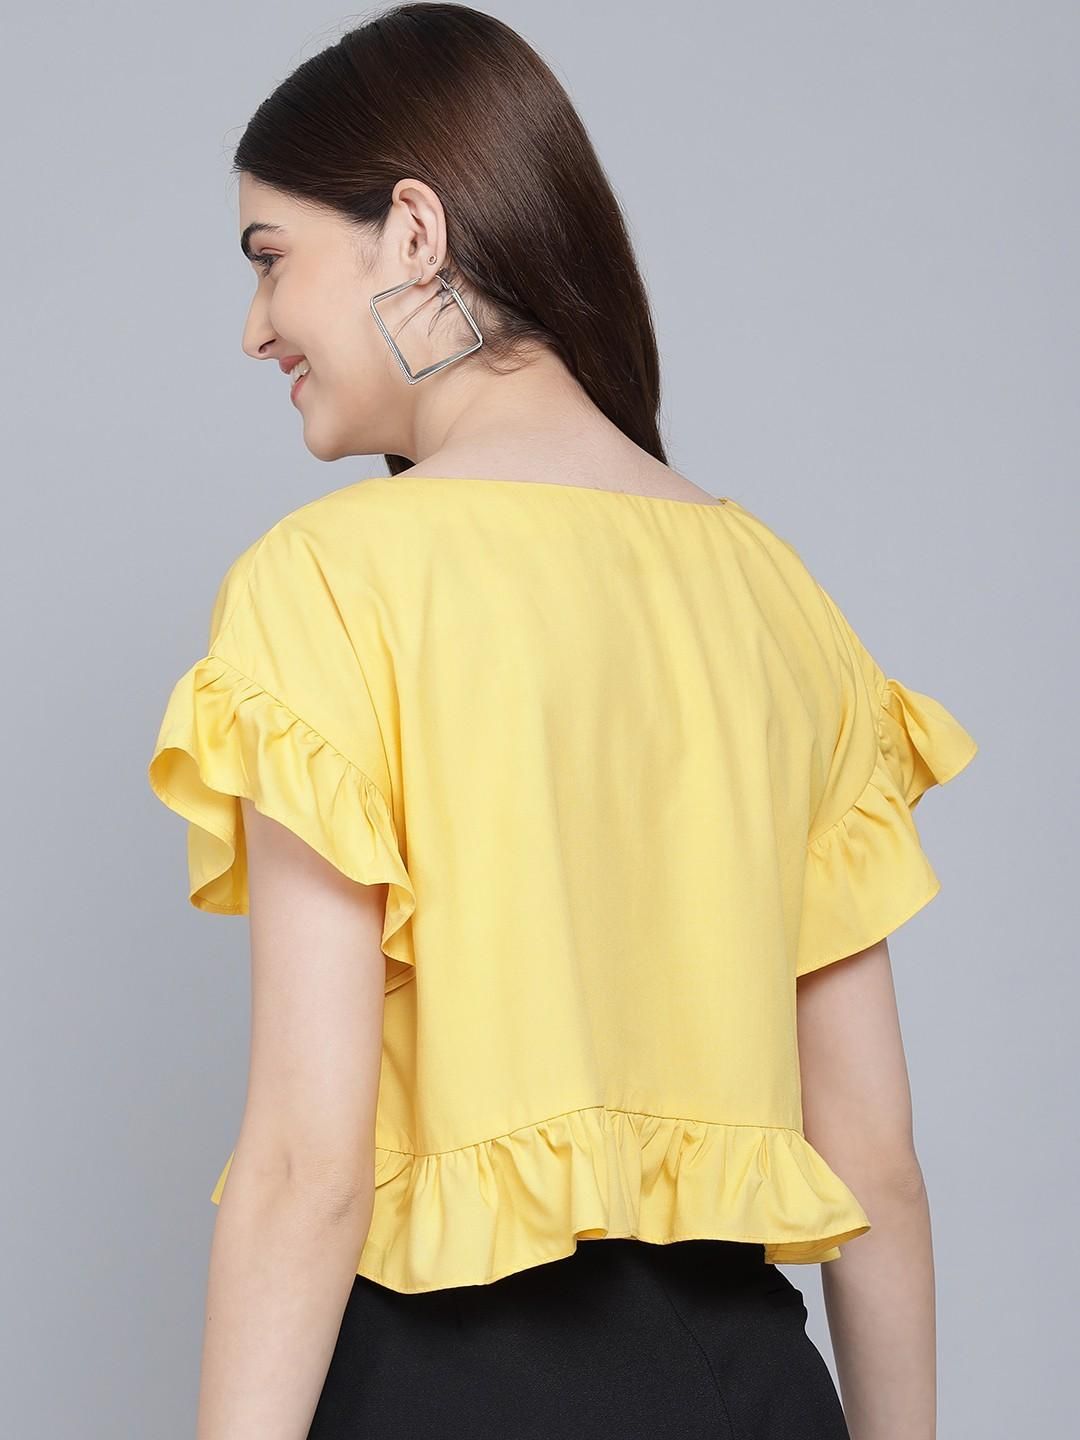 FLAMBOYANT Casual Flared Sleeves Self Design Women Yellow Top